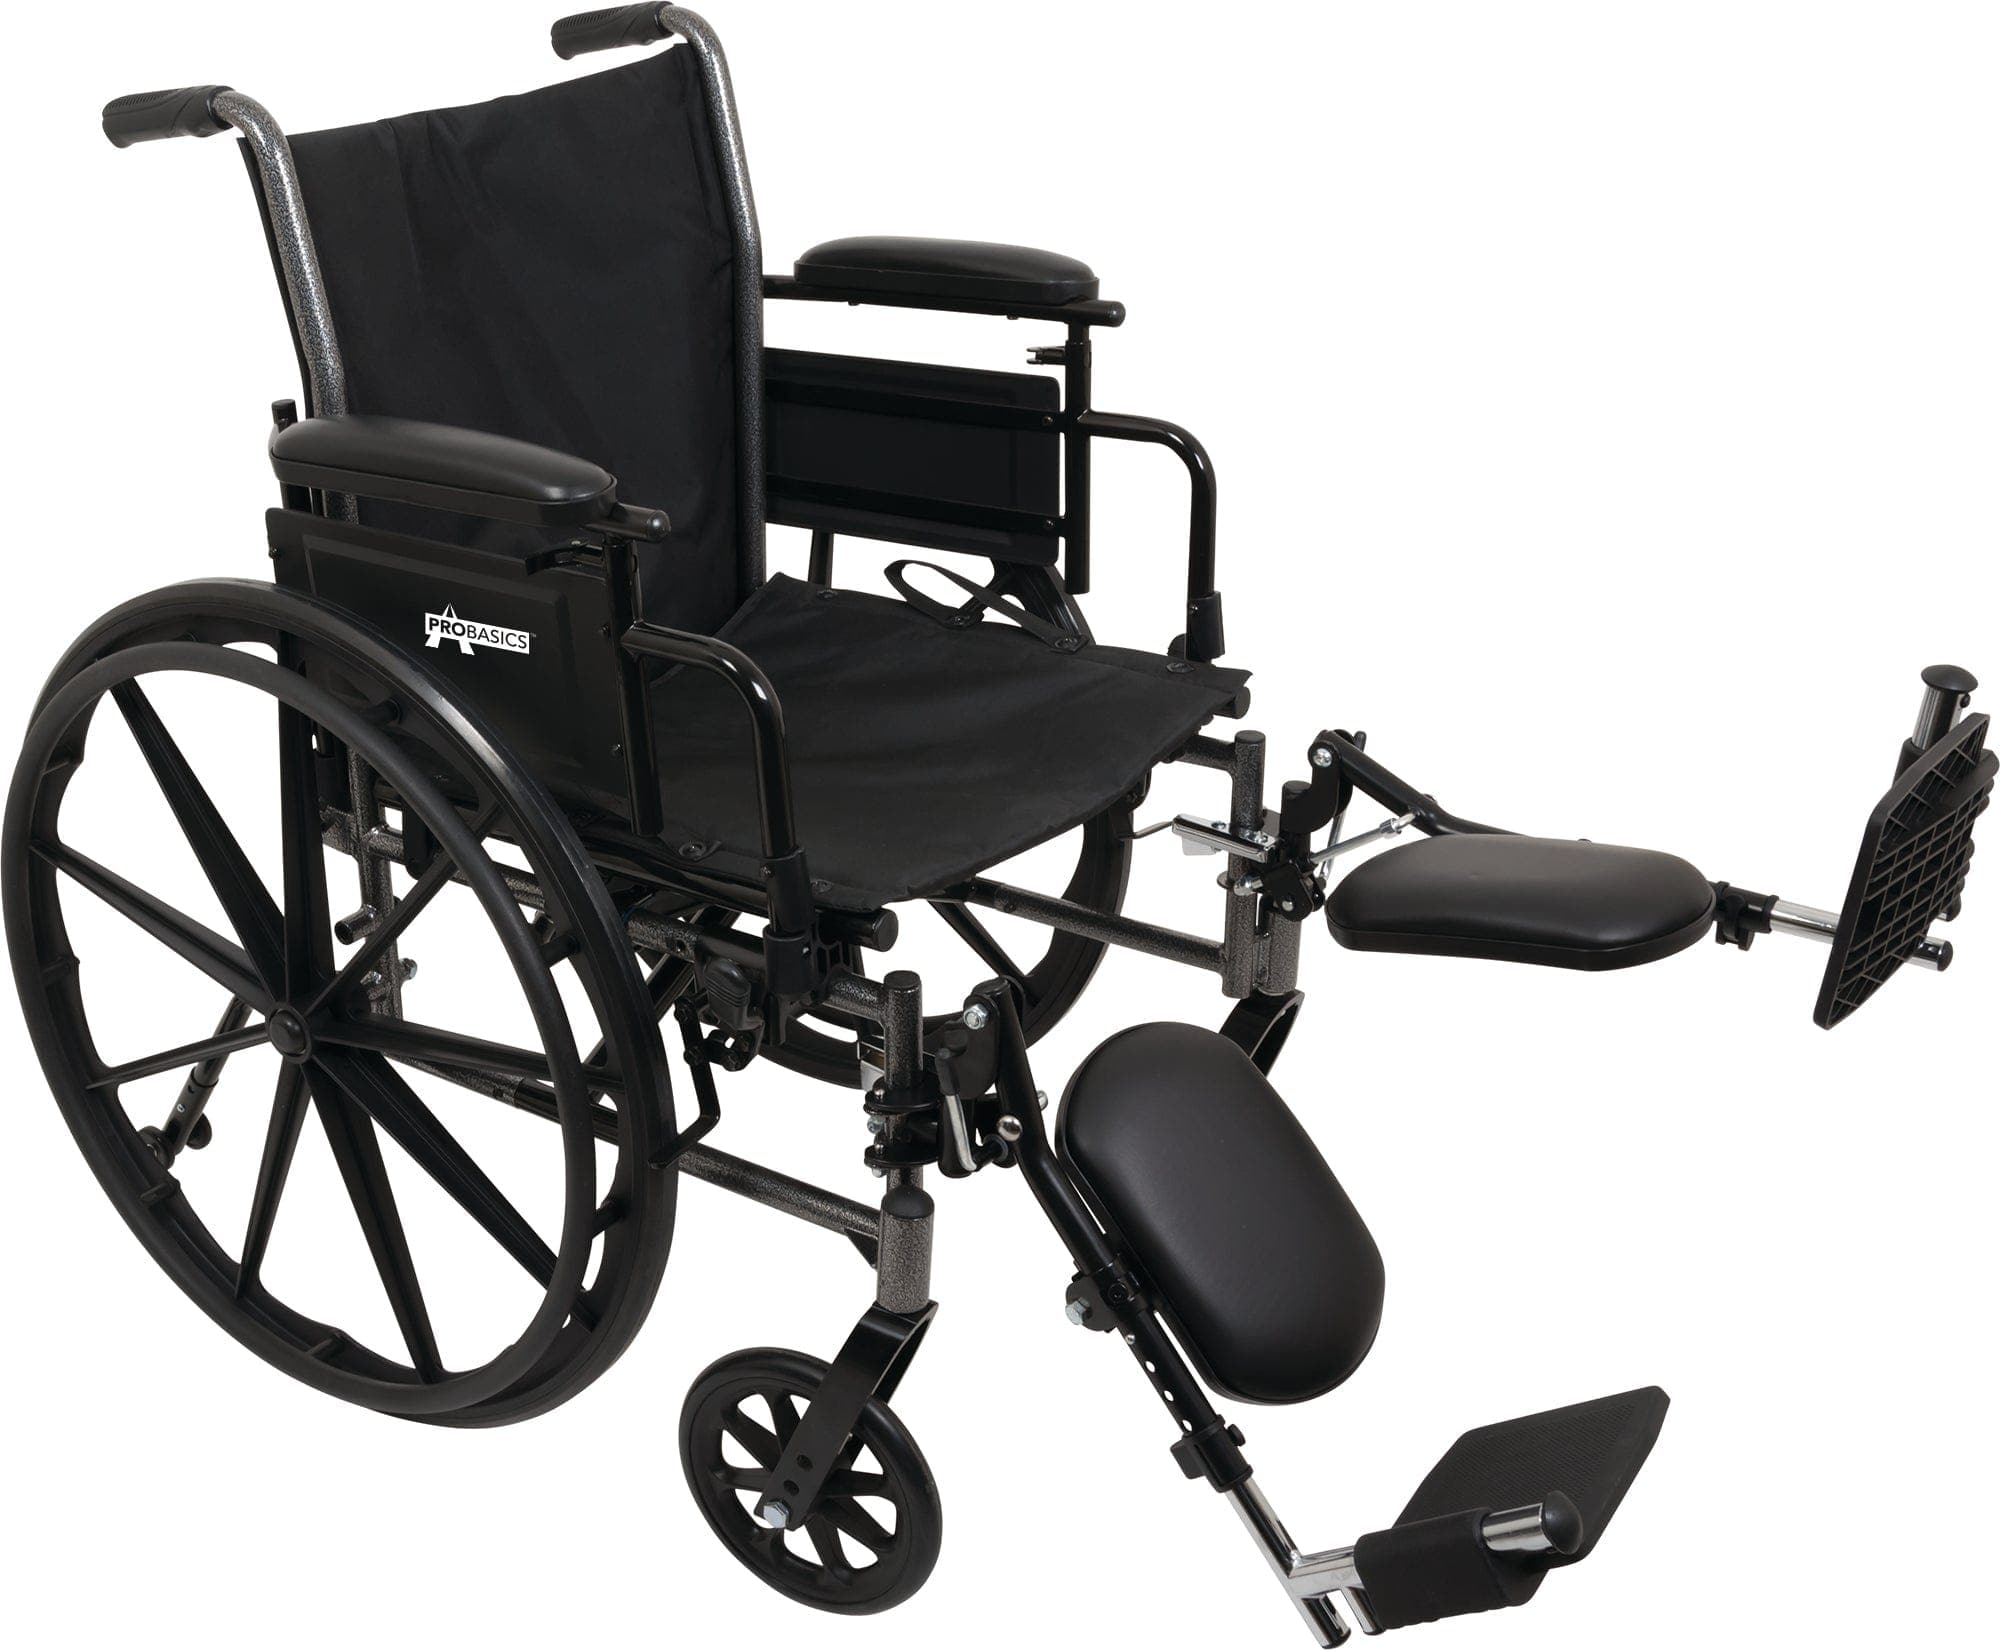 Compass Health K3 Wheelchairs Compass Health ProBasics K3 Lightweight Wheelchair with 20" x 16" Seat,